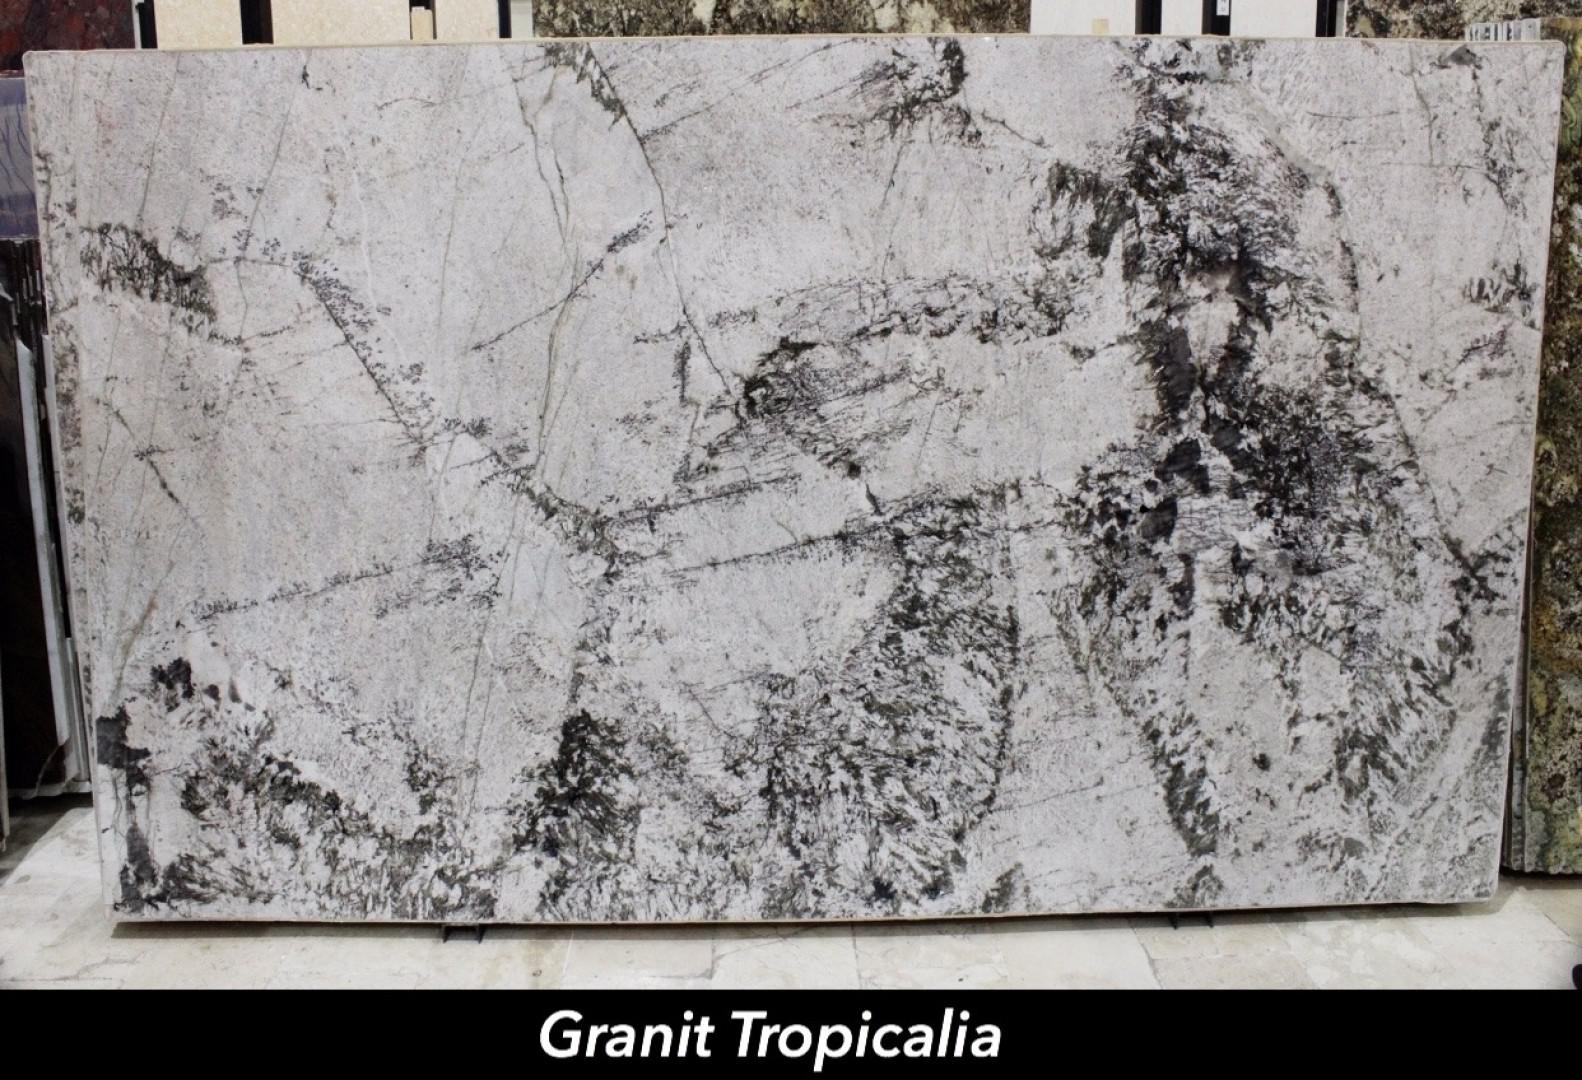 Granit Tropicalia from JSP